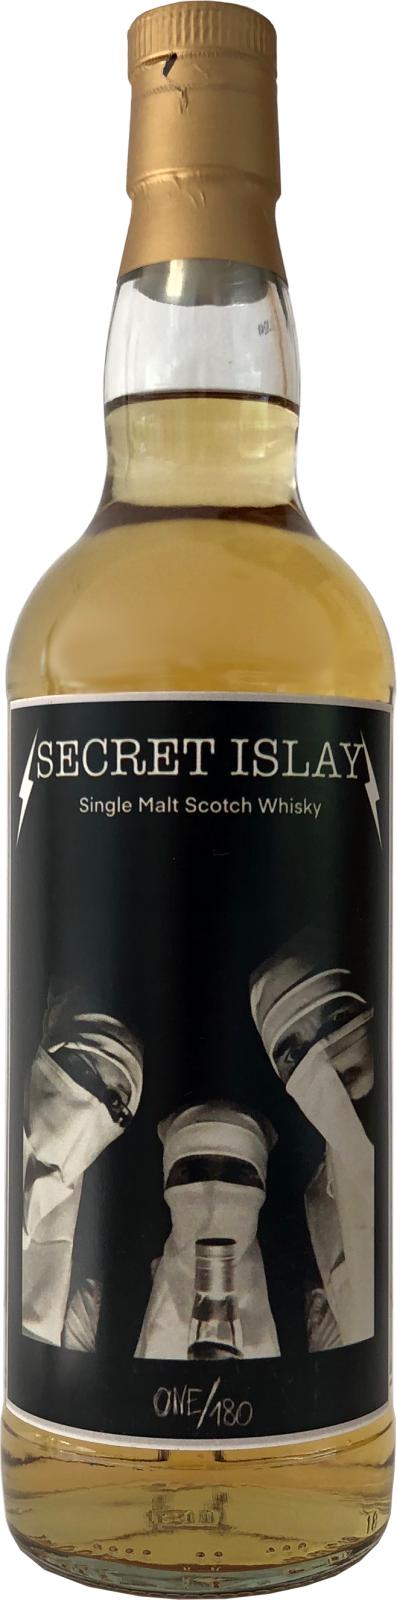 Secret Islay 5yo SltA Black Label Collection 53.9% 700ml